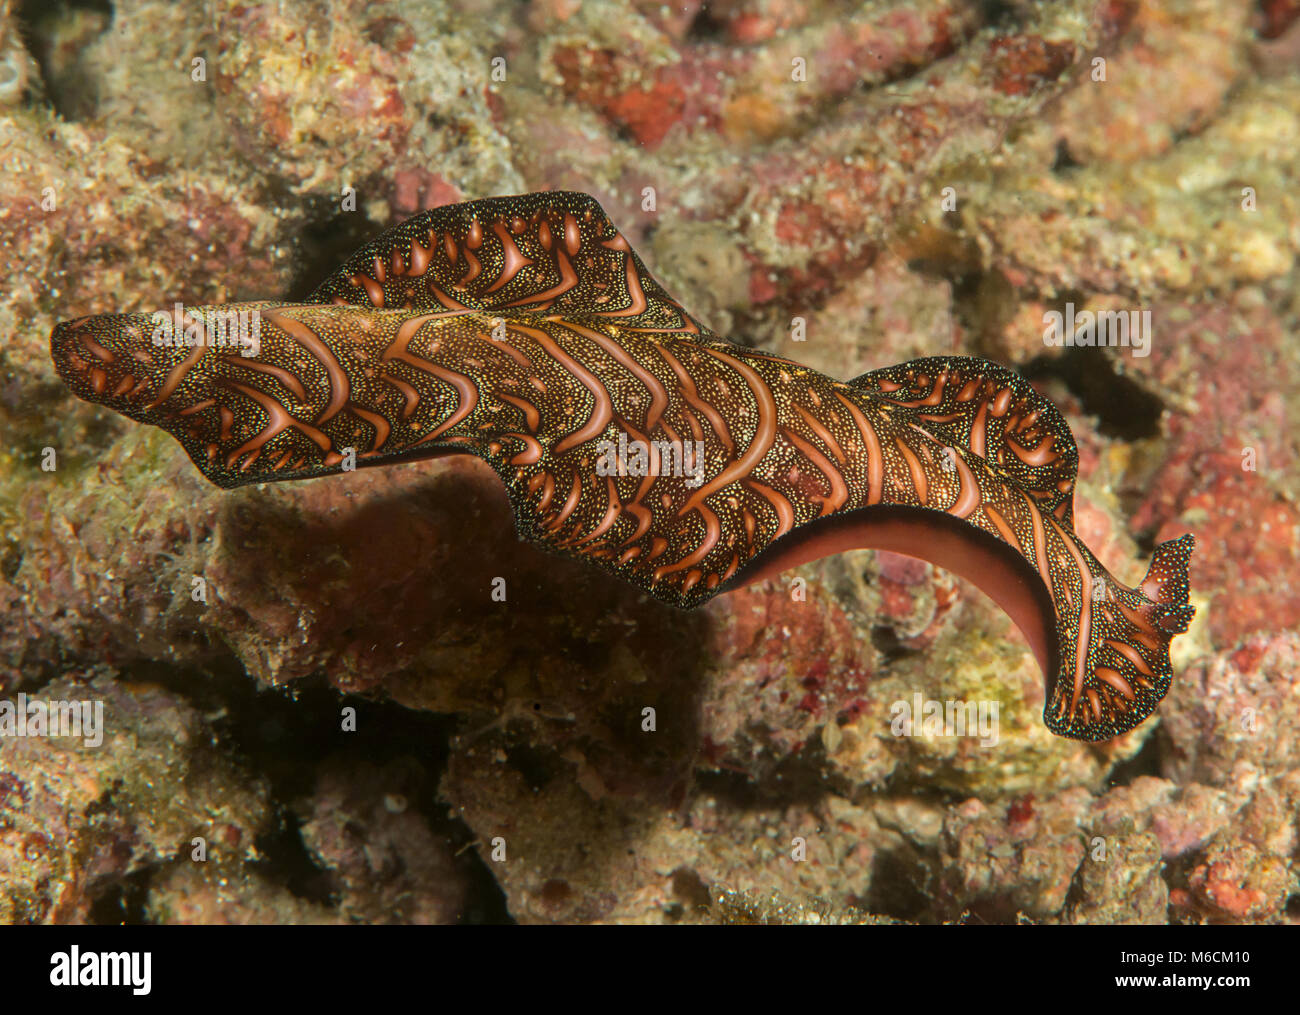 Persian carpet flatworm ( Pseudobiceros bedfordi ) swimming over coral reef of Bali, Indonesia Stock Photo